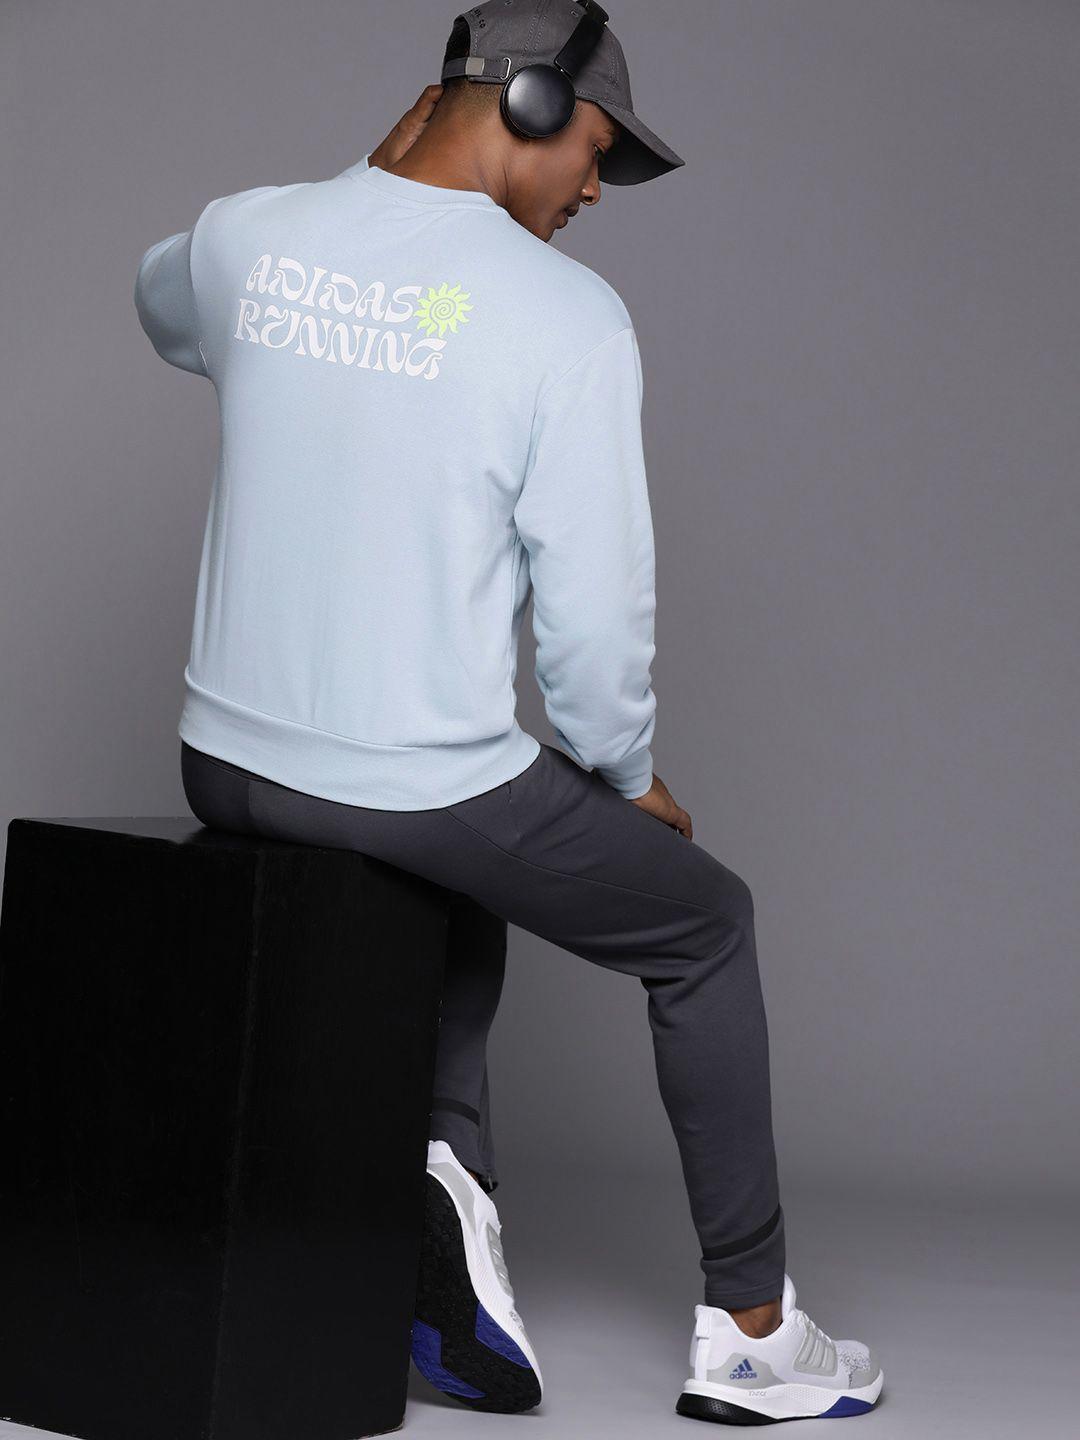 adidas unisex btn uf crew printed running sweatshirt